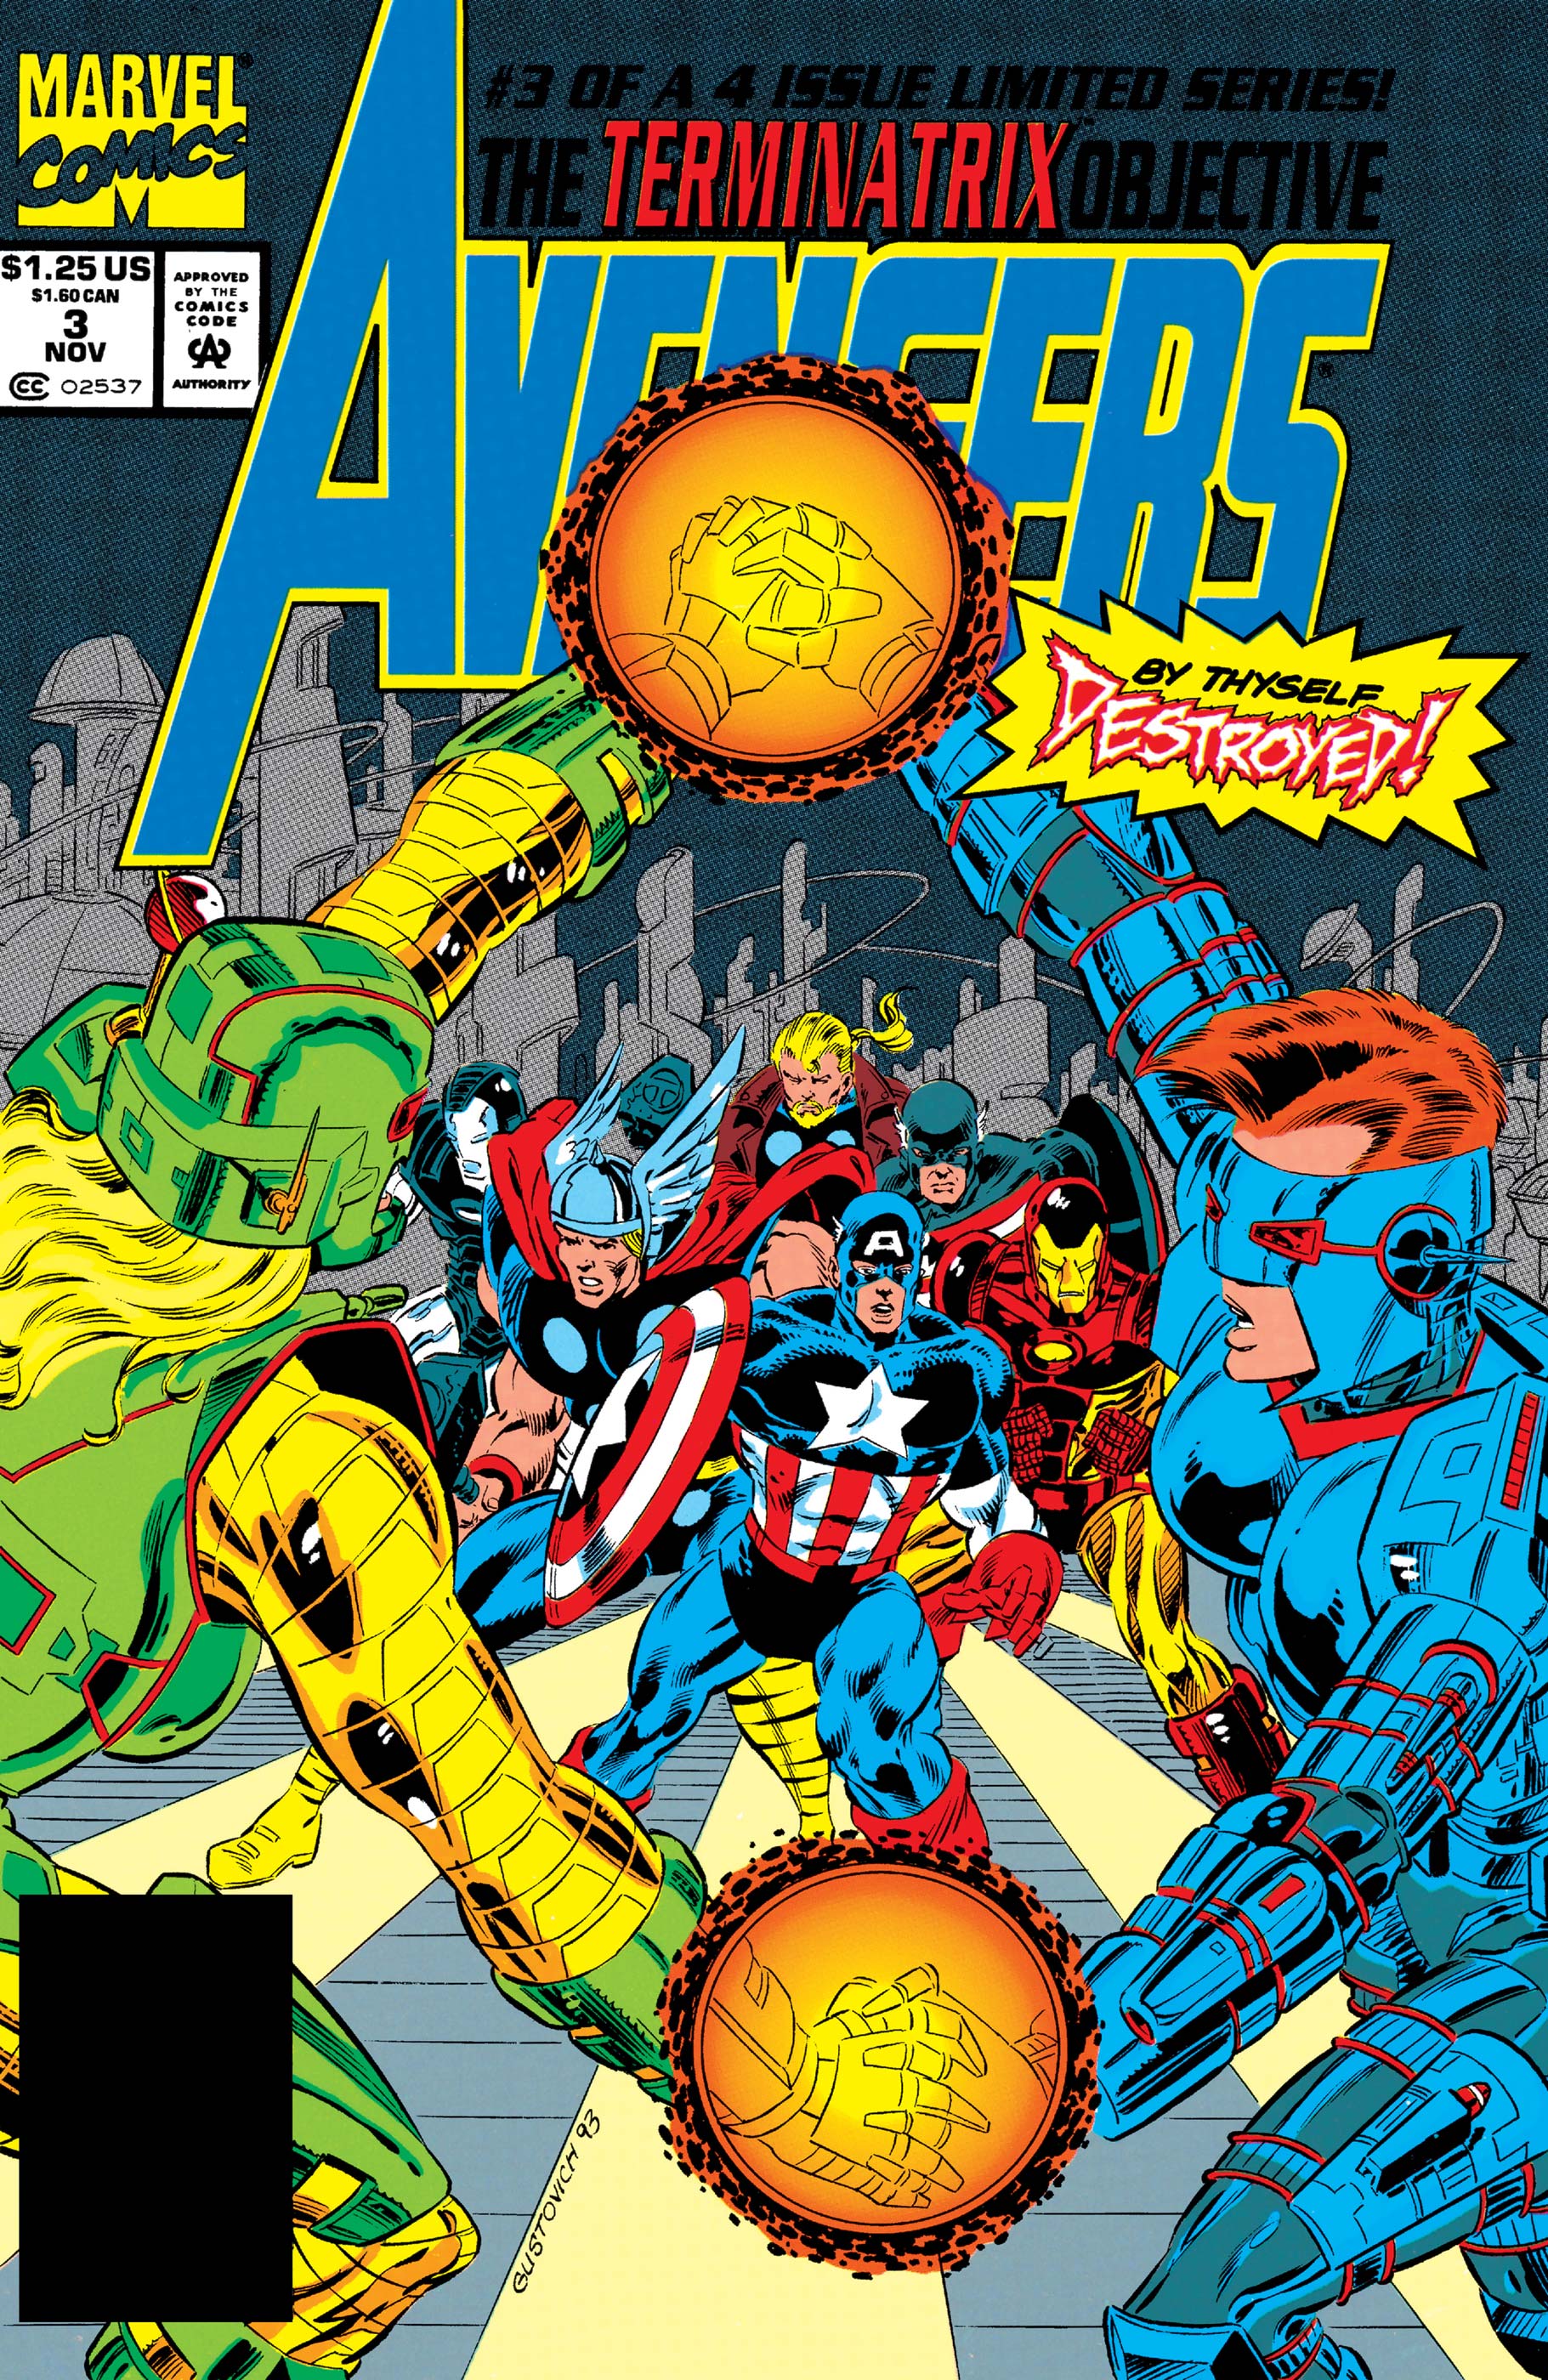 Avengers: The Terminatrix Objective (1993) #3